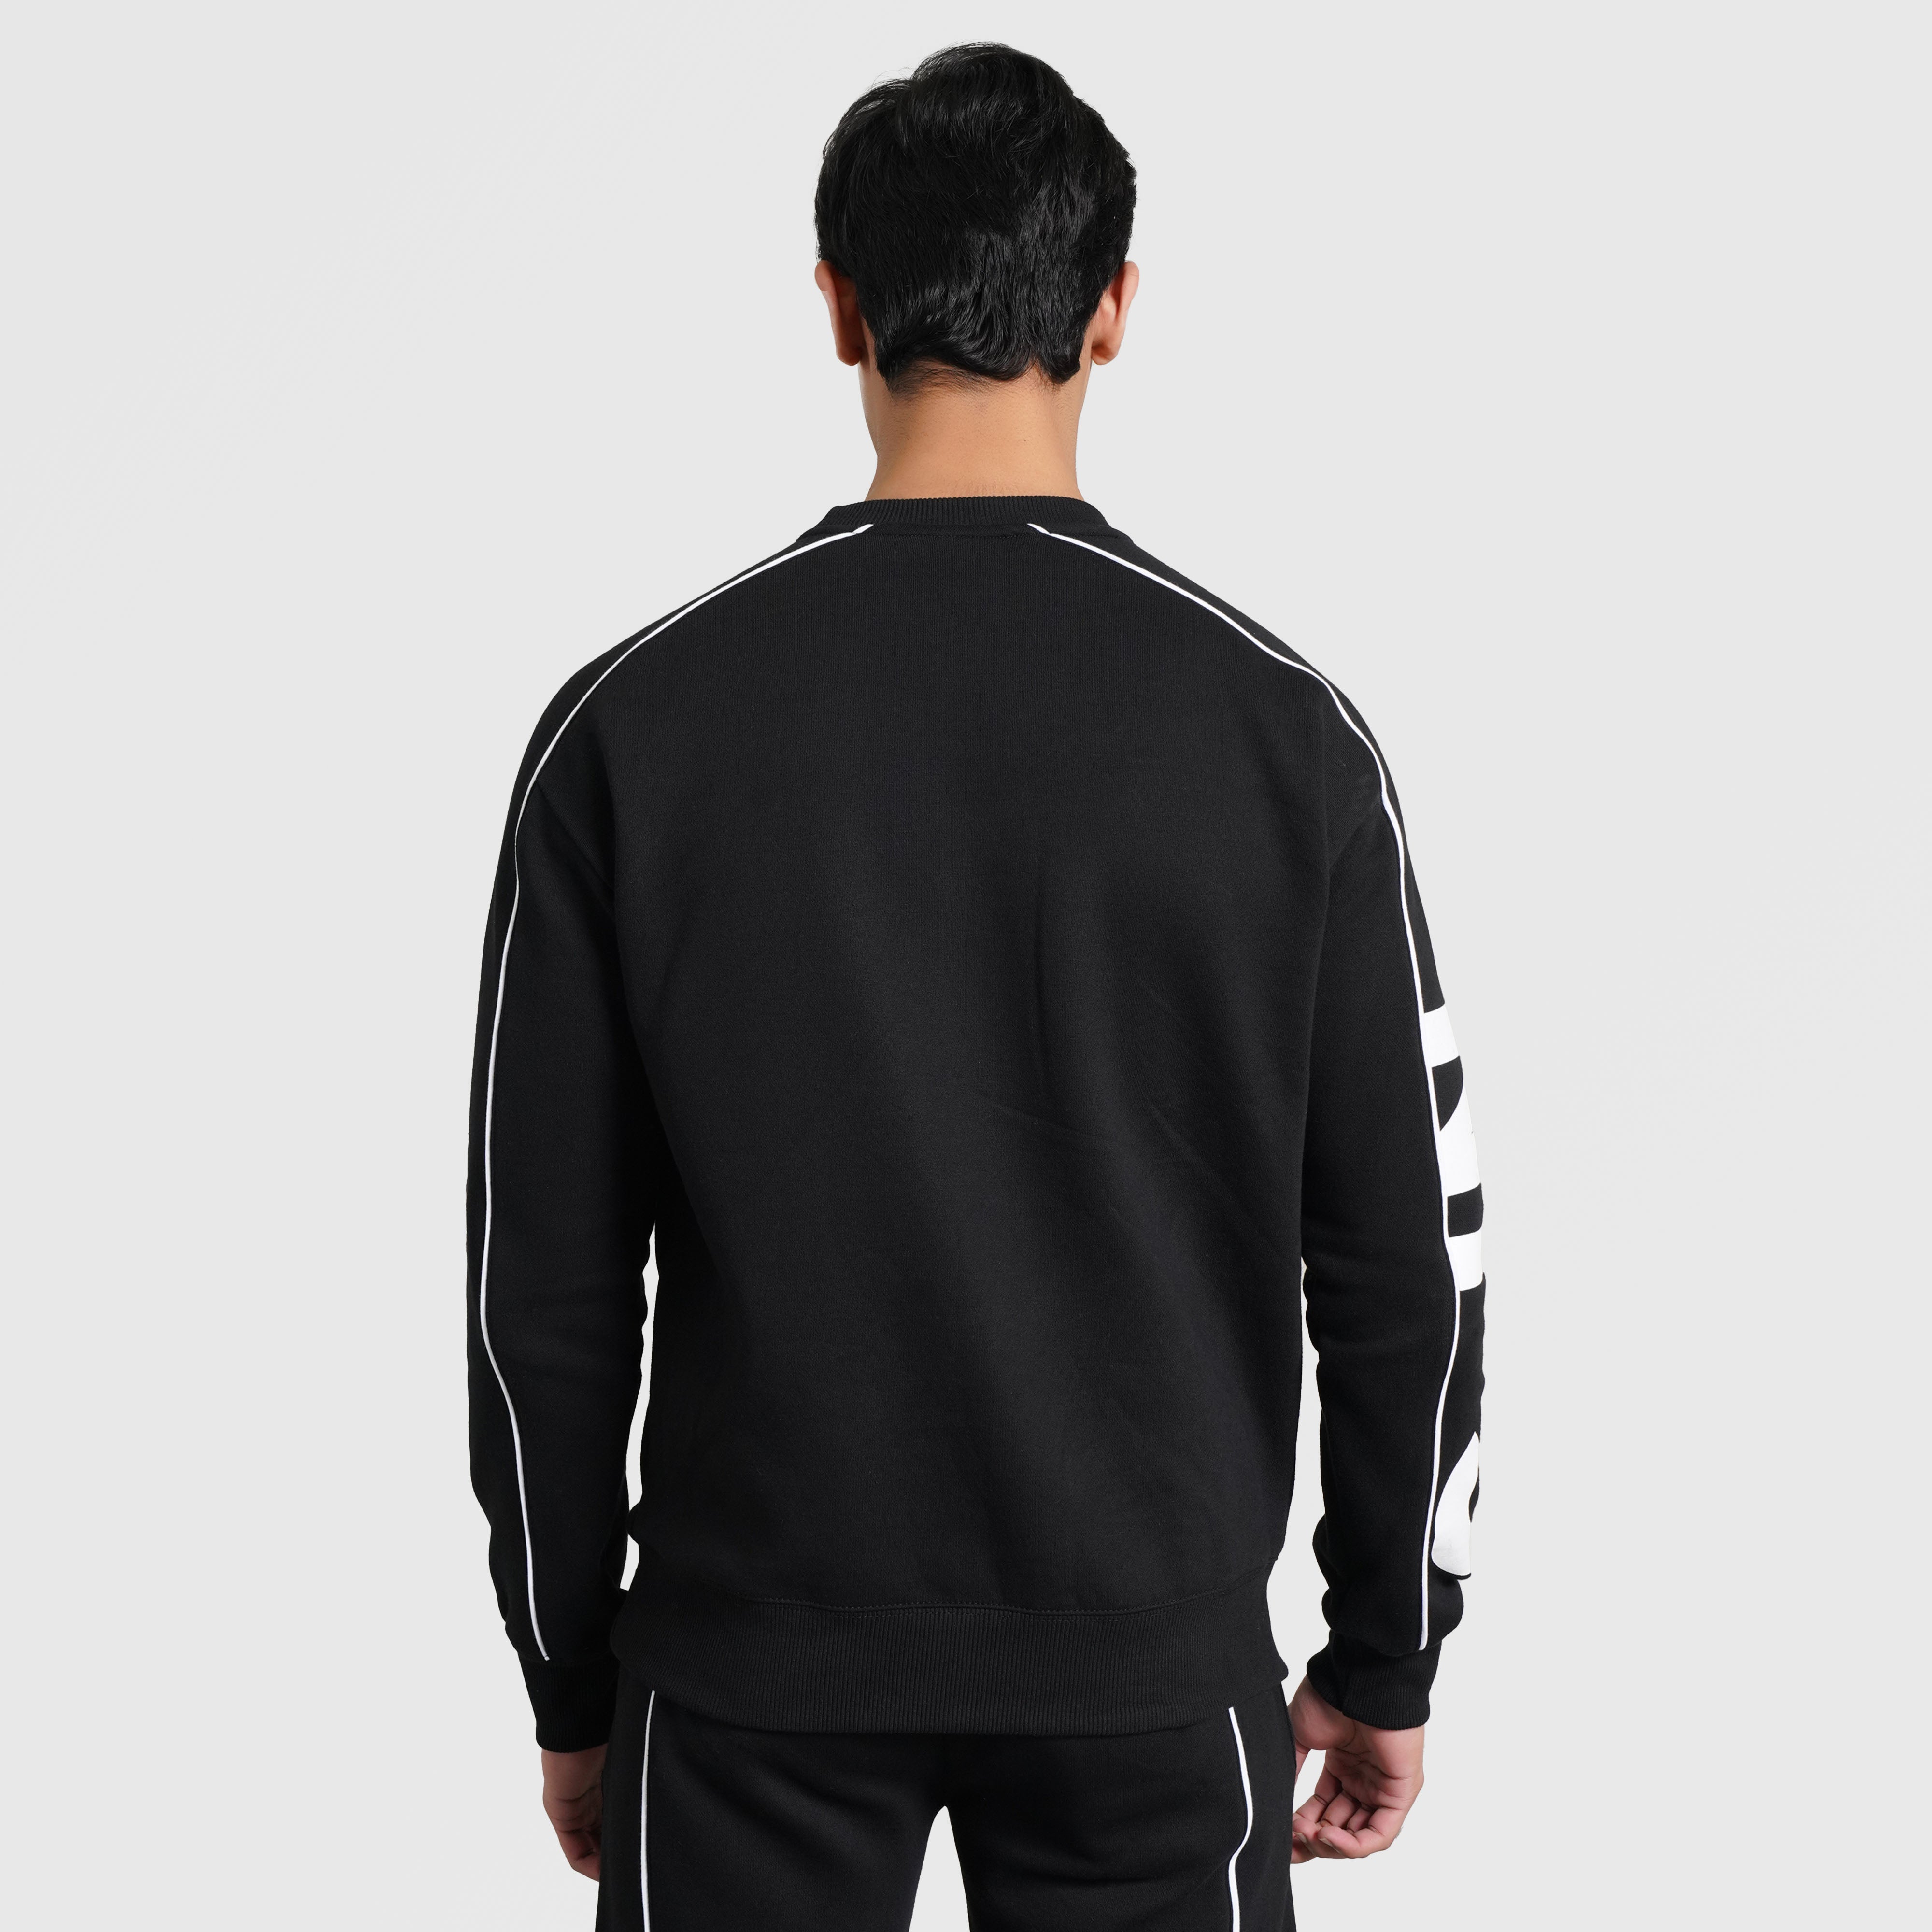 Rave Sweatshirt (Black)